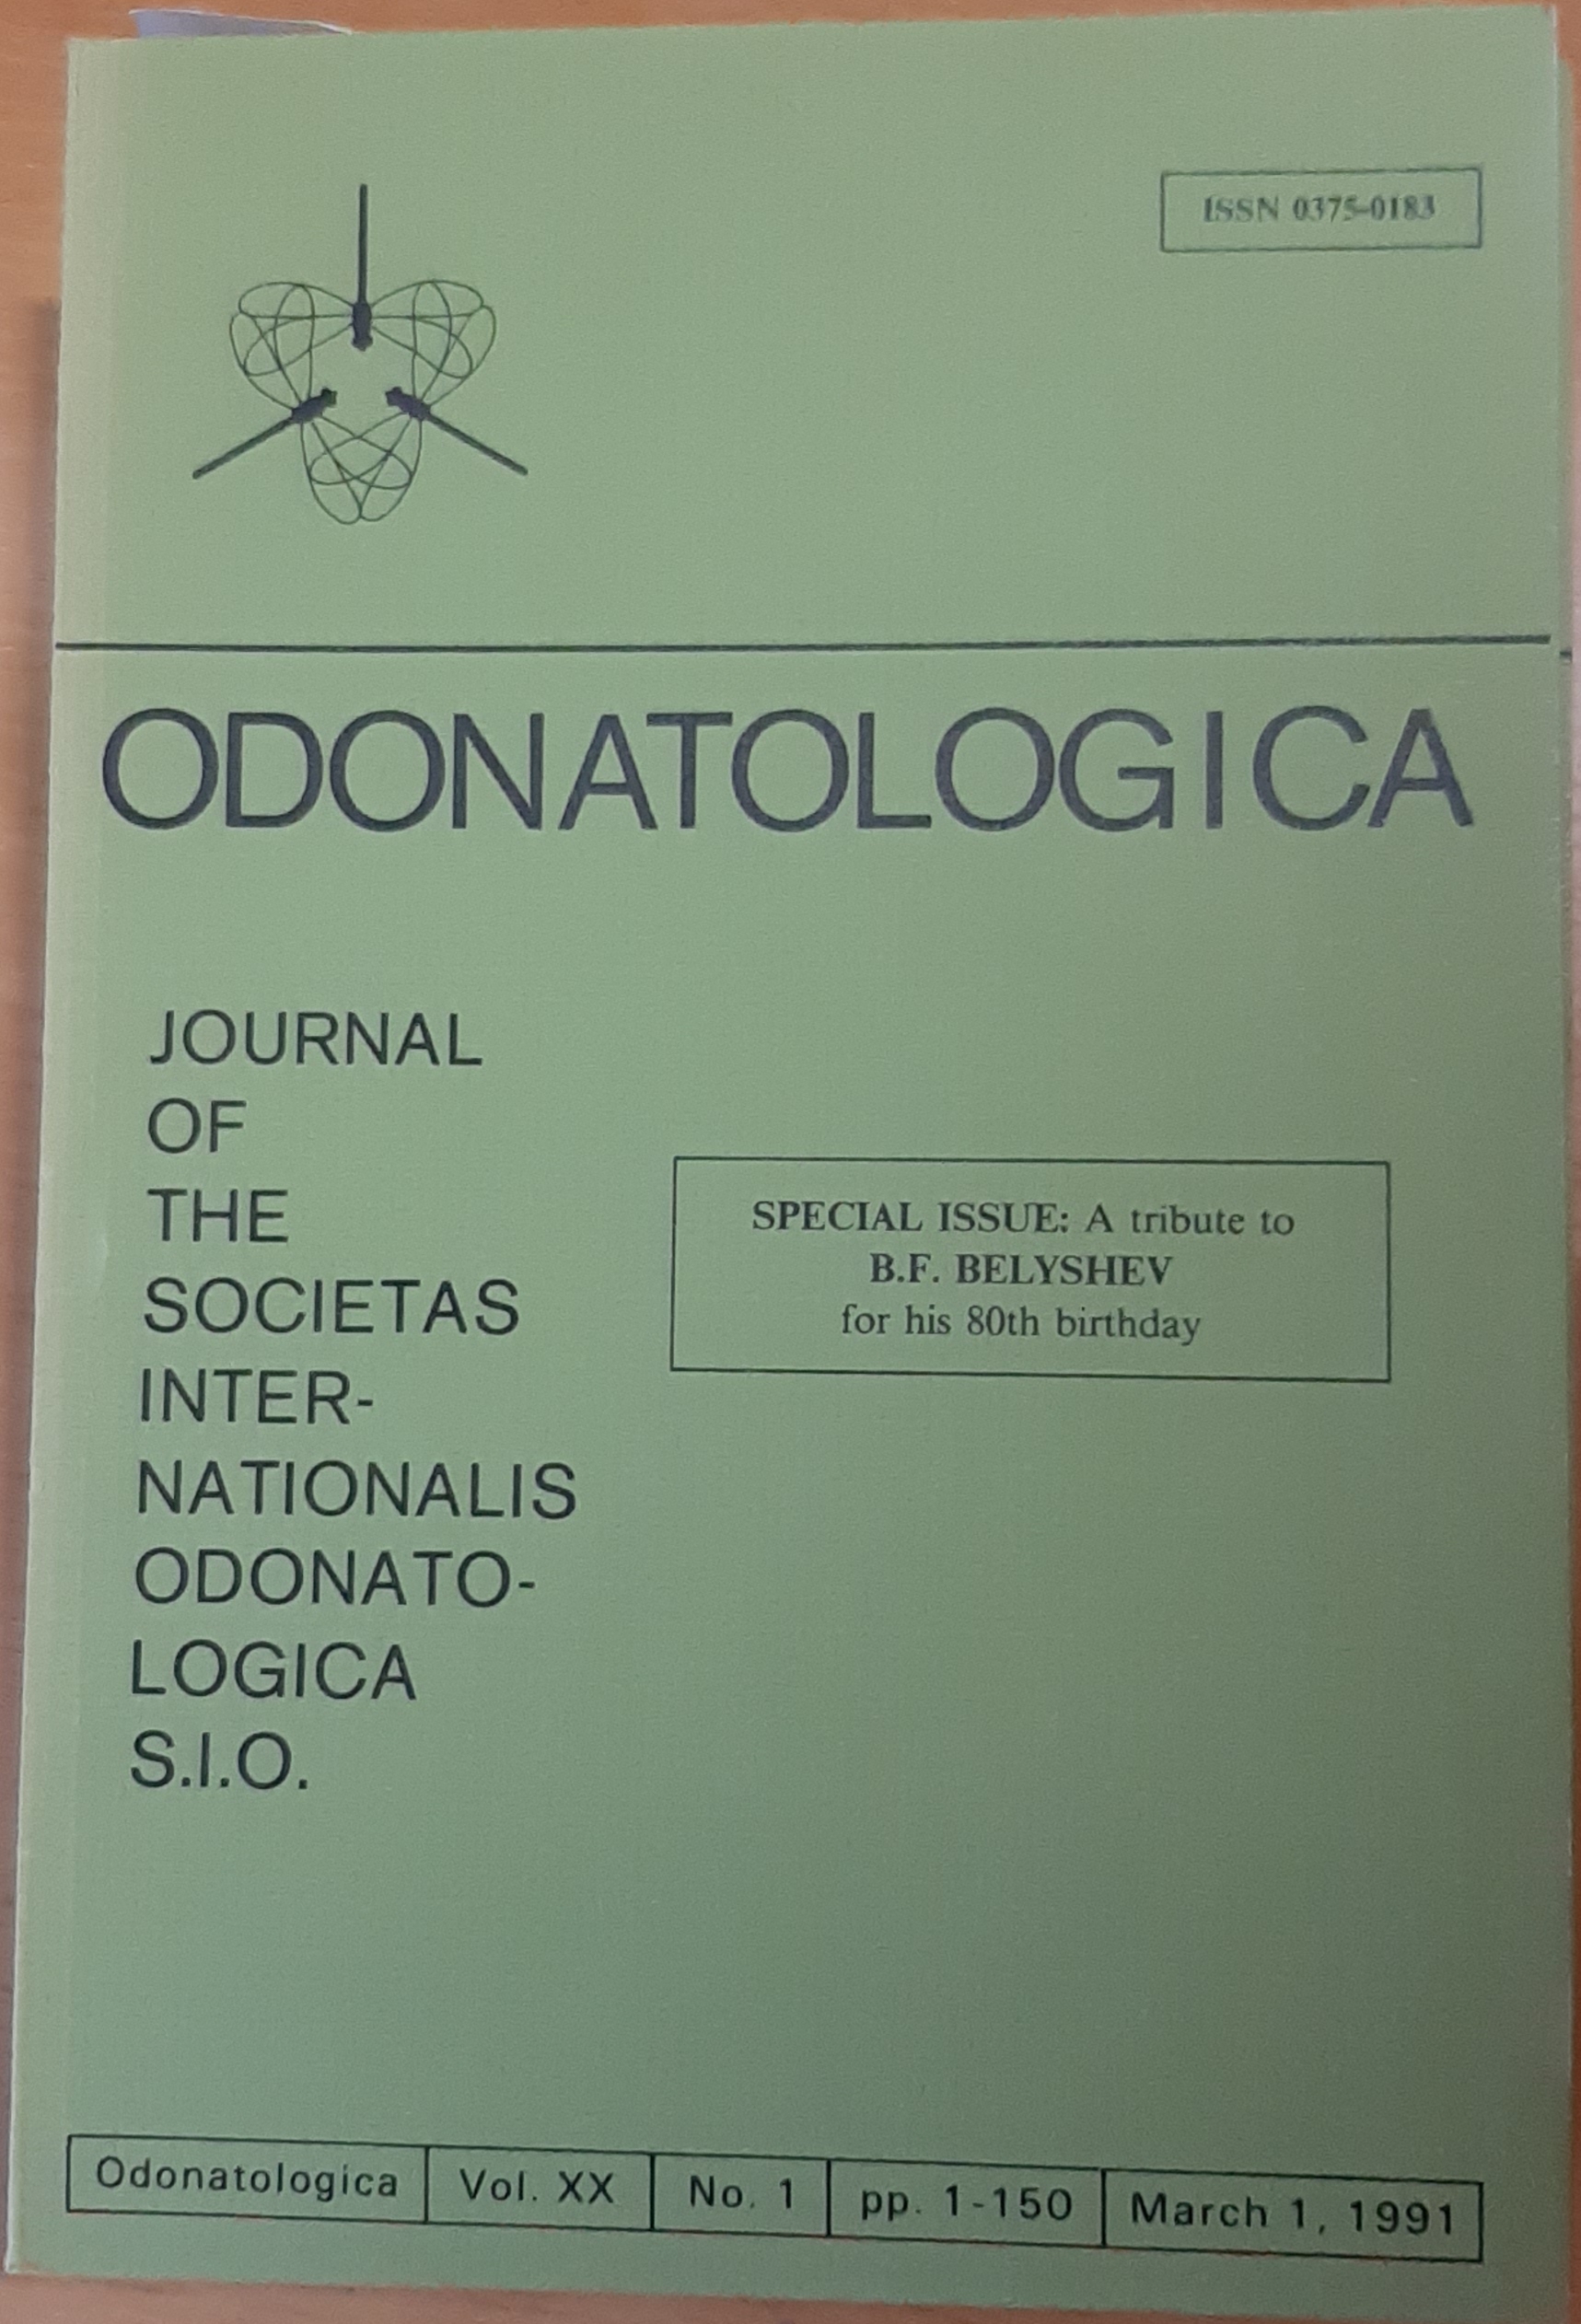 Odonatologica 1991/20. évf. 1. szám Journal of the Societas Internationalis Odonatologica S.I.O. (Rippl-Rónai Múzeum RR-F)